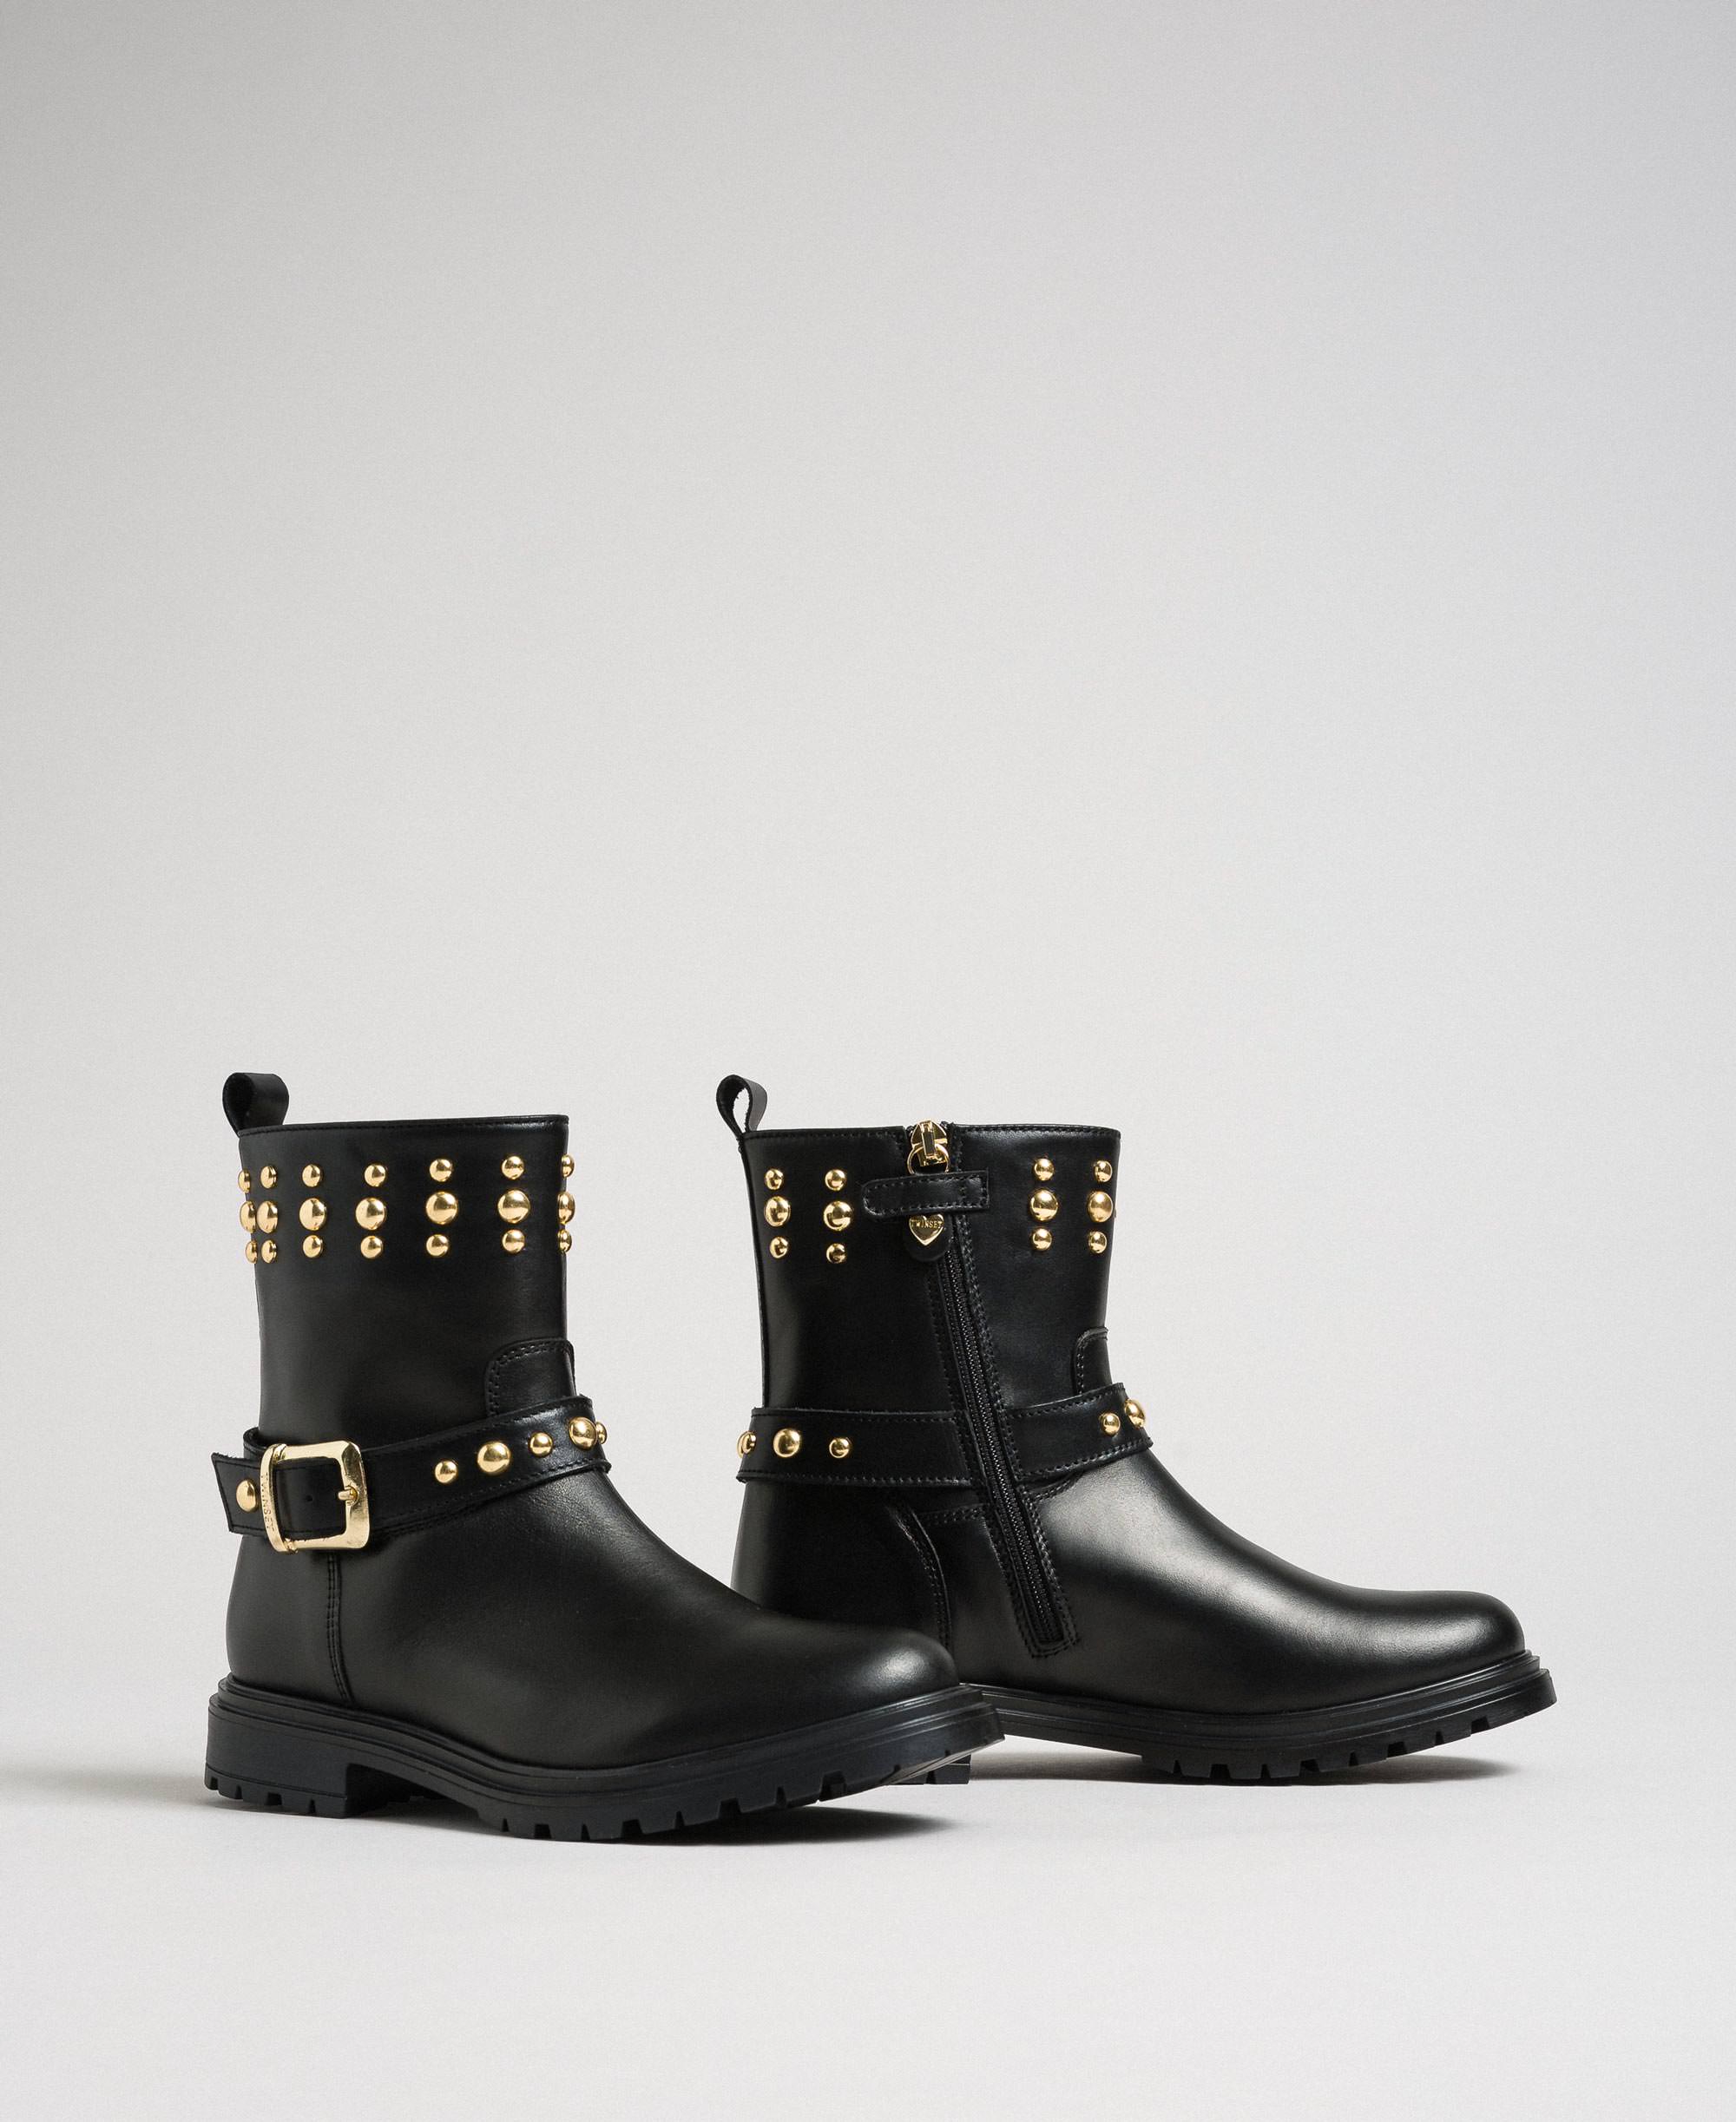 Comfort Studded Side Slip On Faux Leather Rubber Sole Black Boots UK 4 EU 37 956 